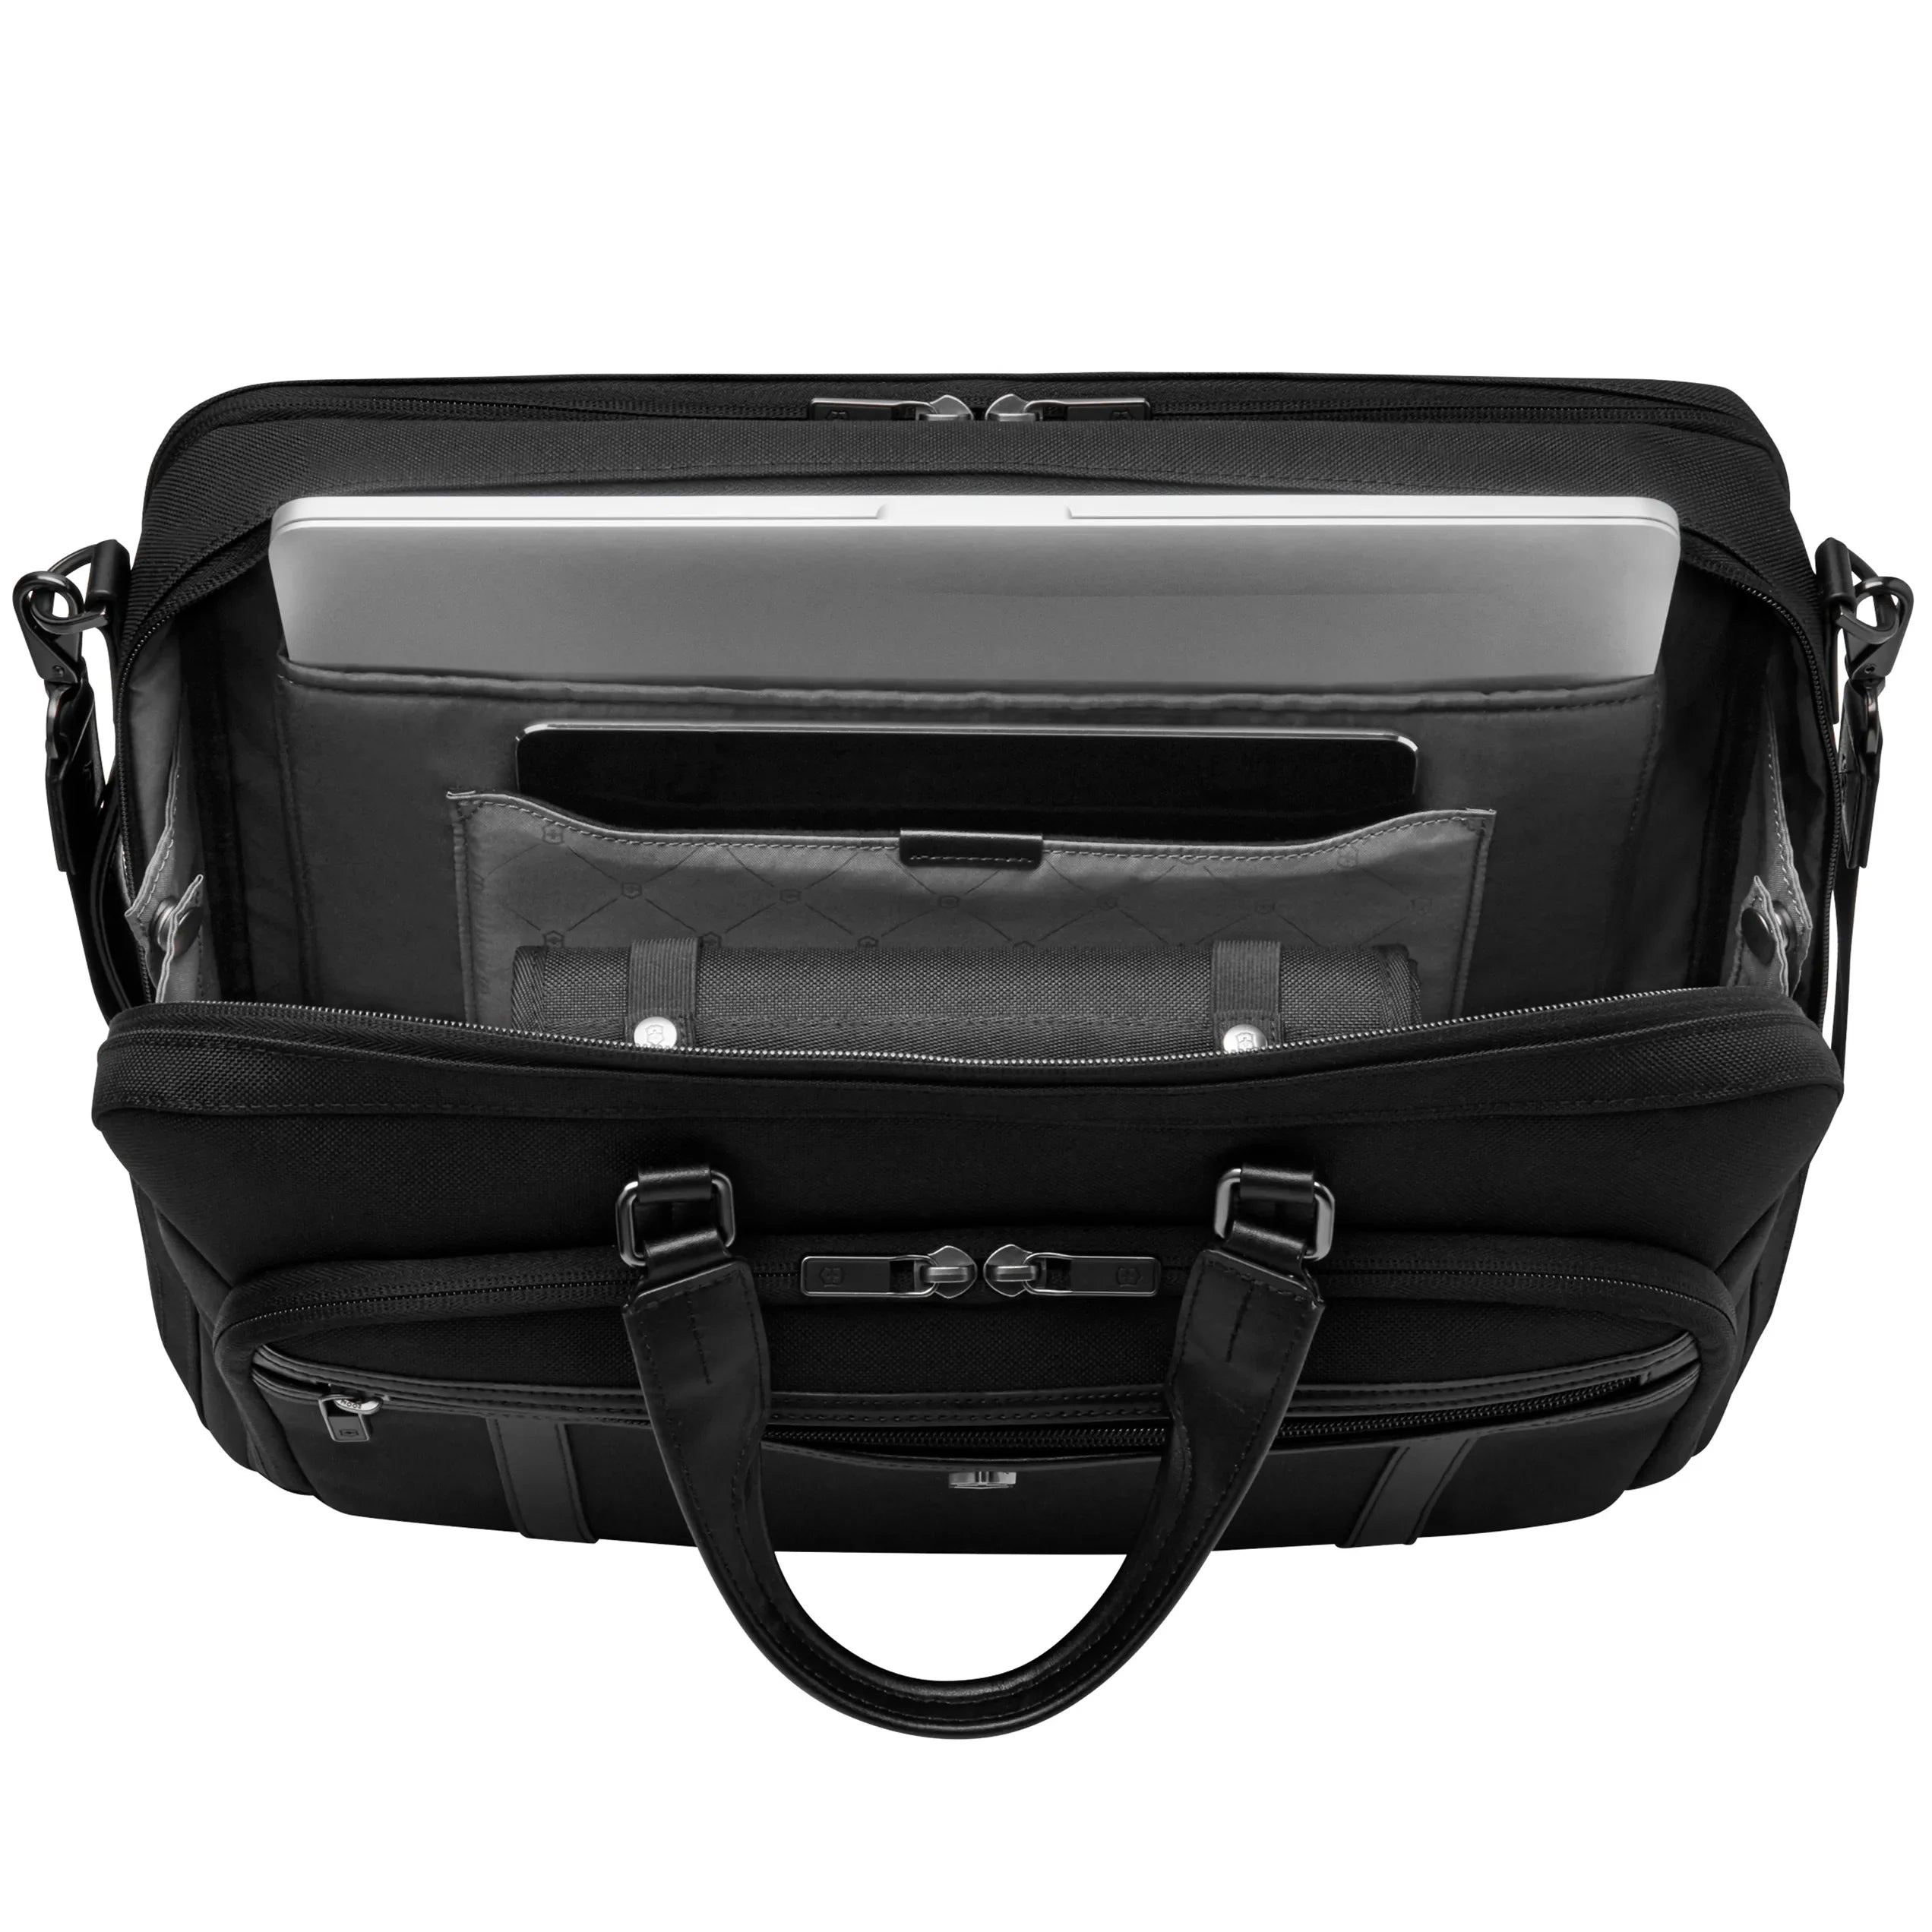 Victorinox Werks Professional Cordura 2-Way Carry Laptop Bag 45 cm - Black